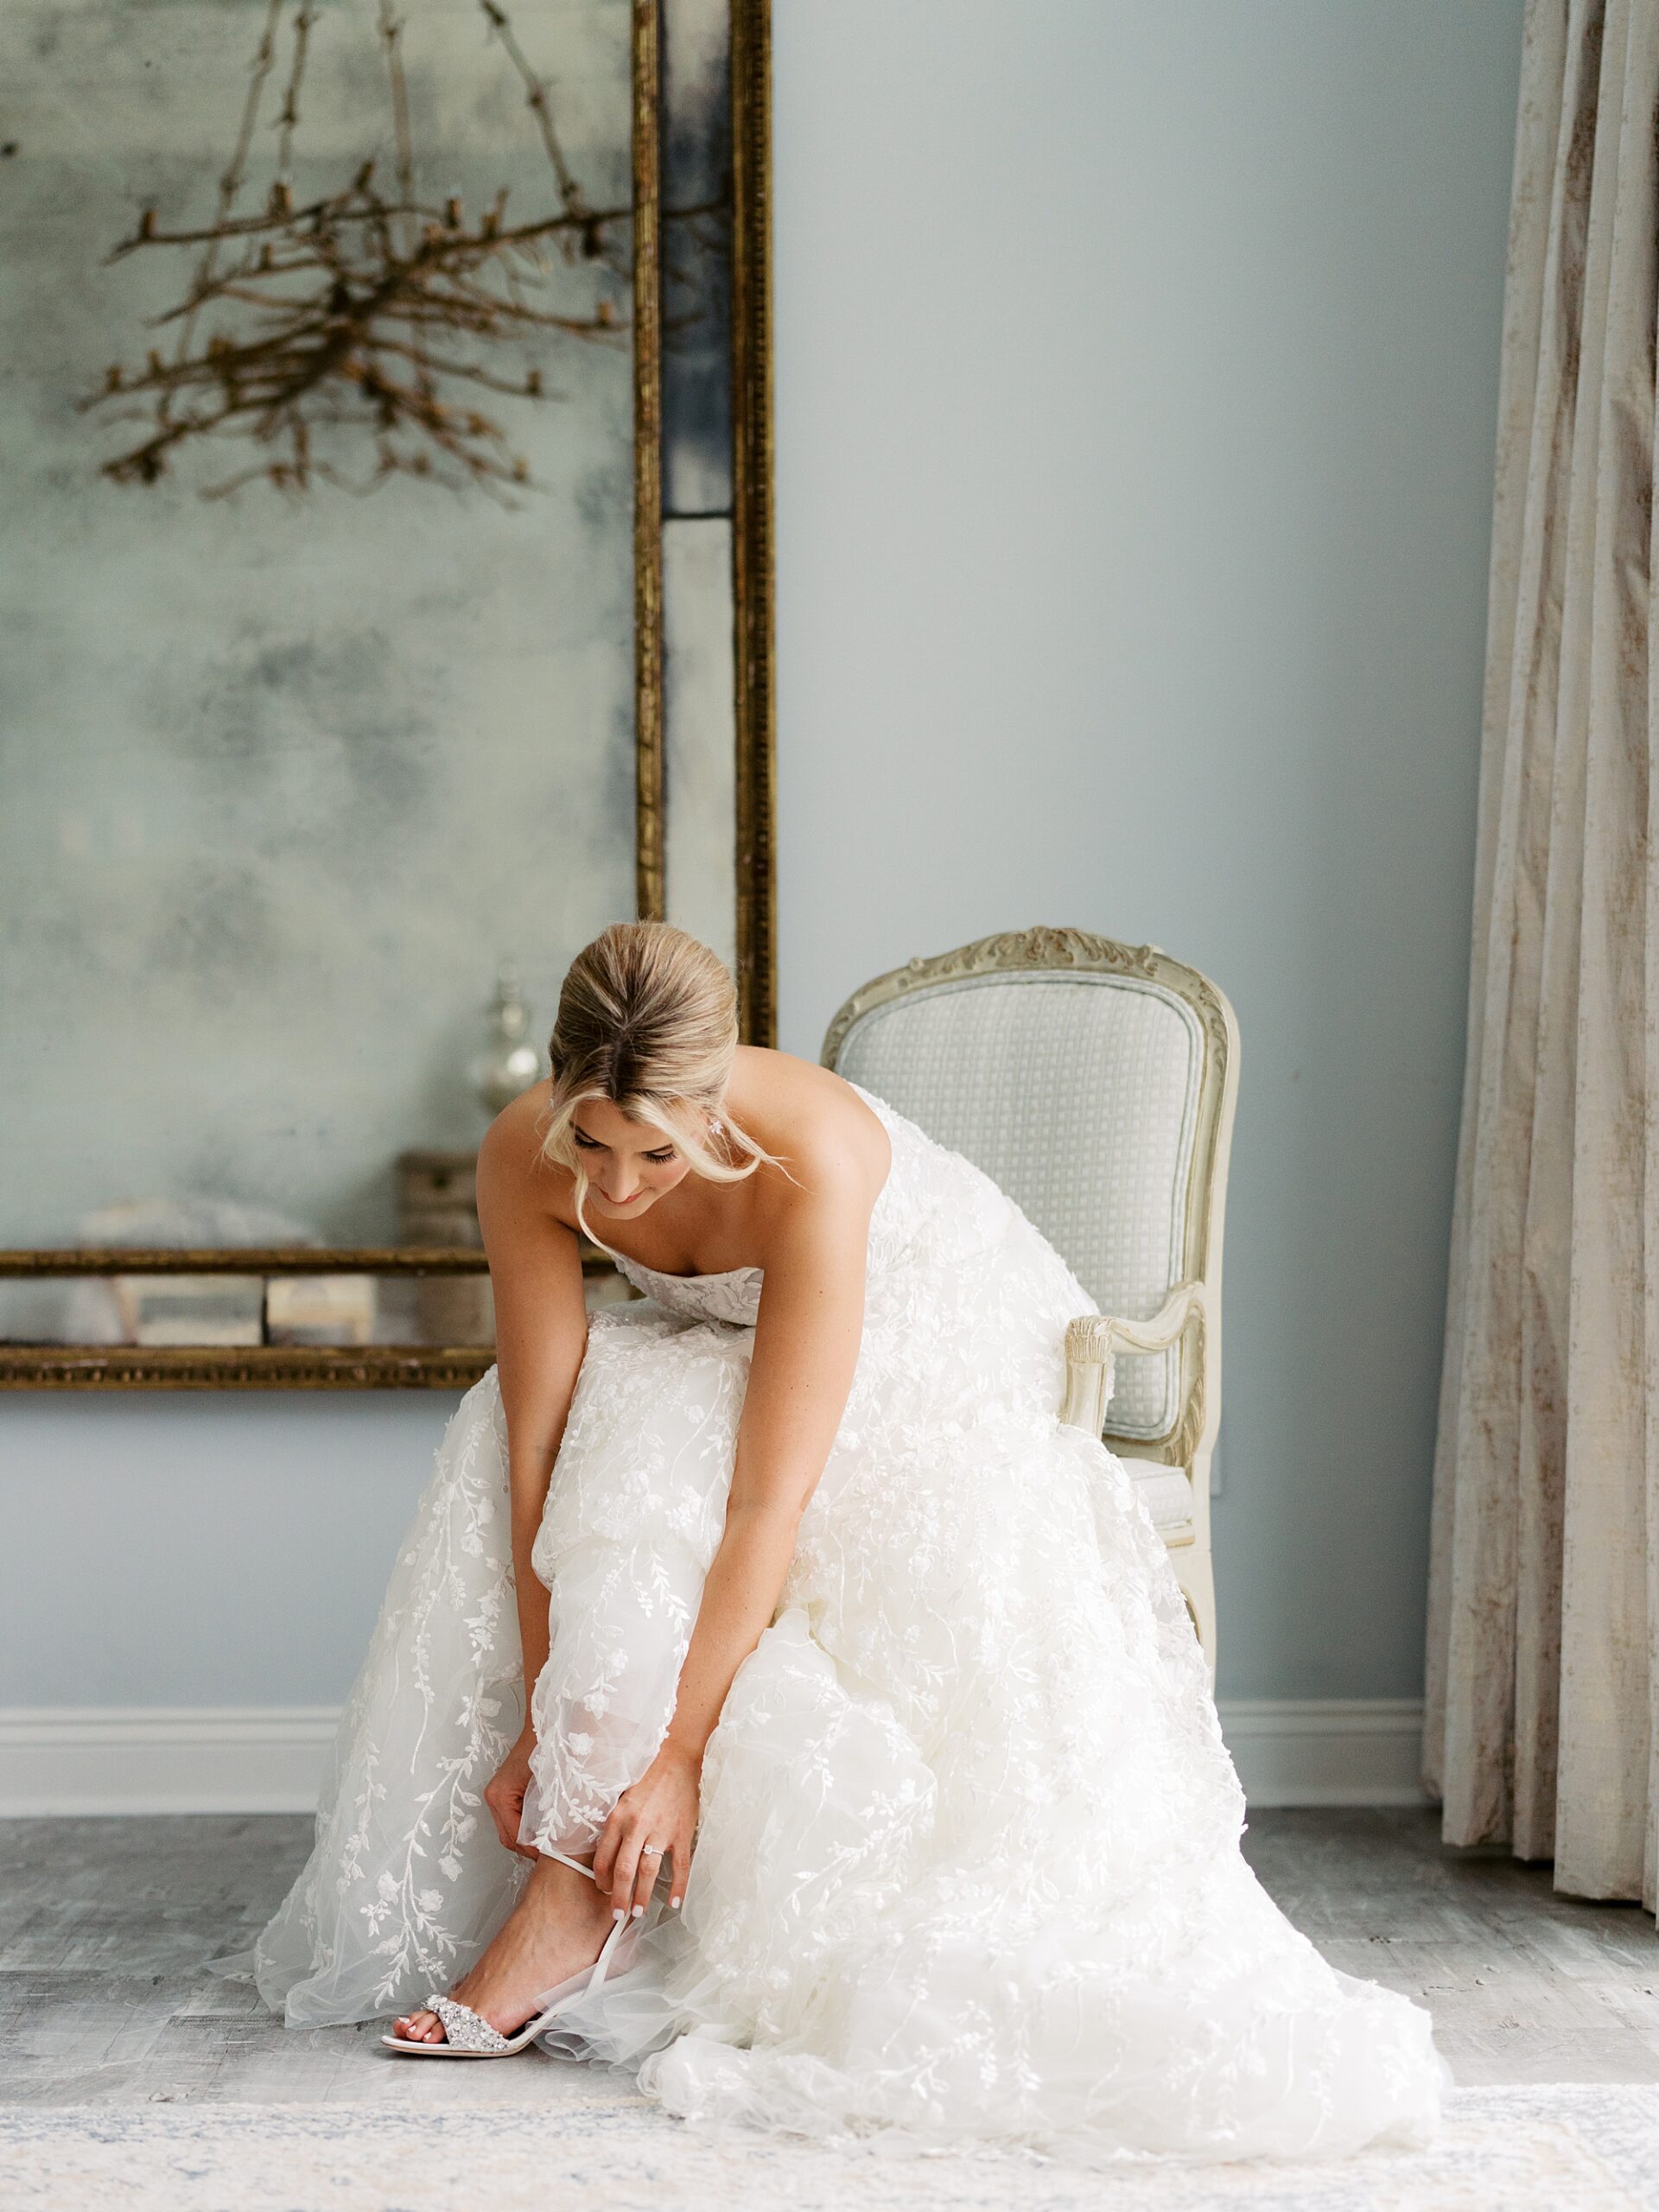 bride leans down to adjust shoes under skirt of wedding dress at Le Pavilion Hotel